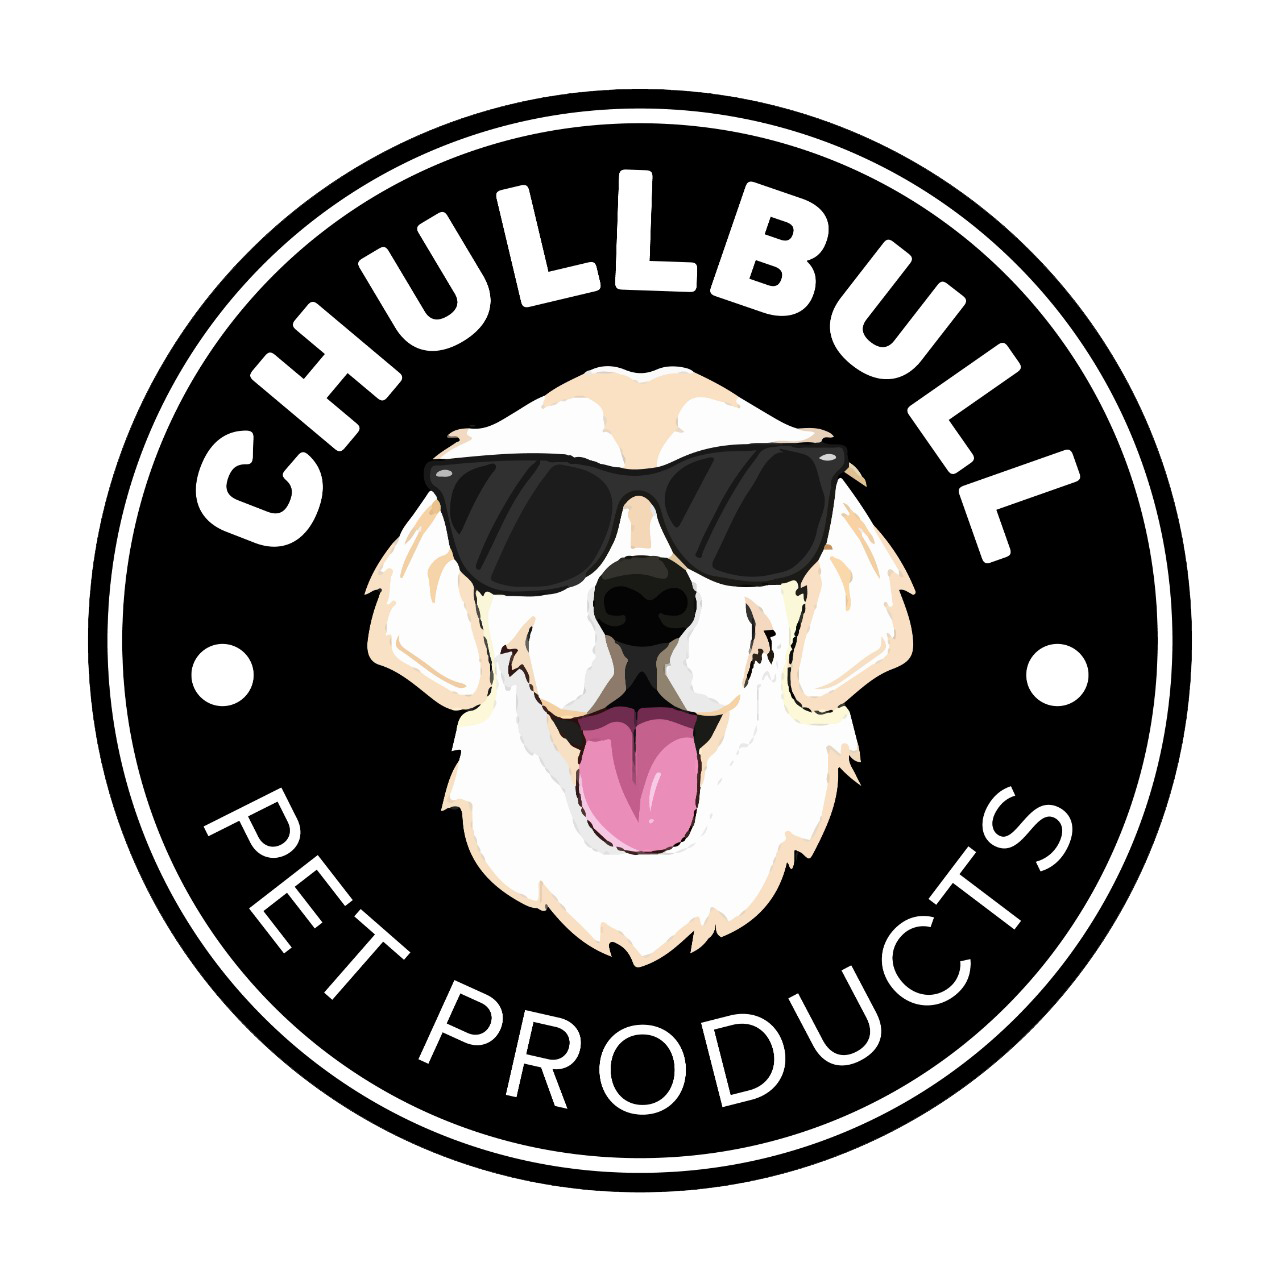 Chullbull Pet Products